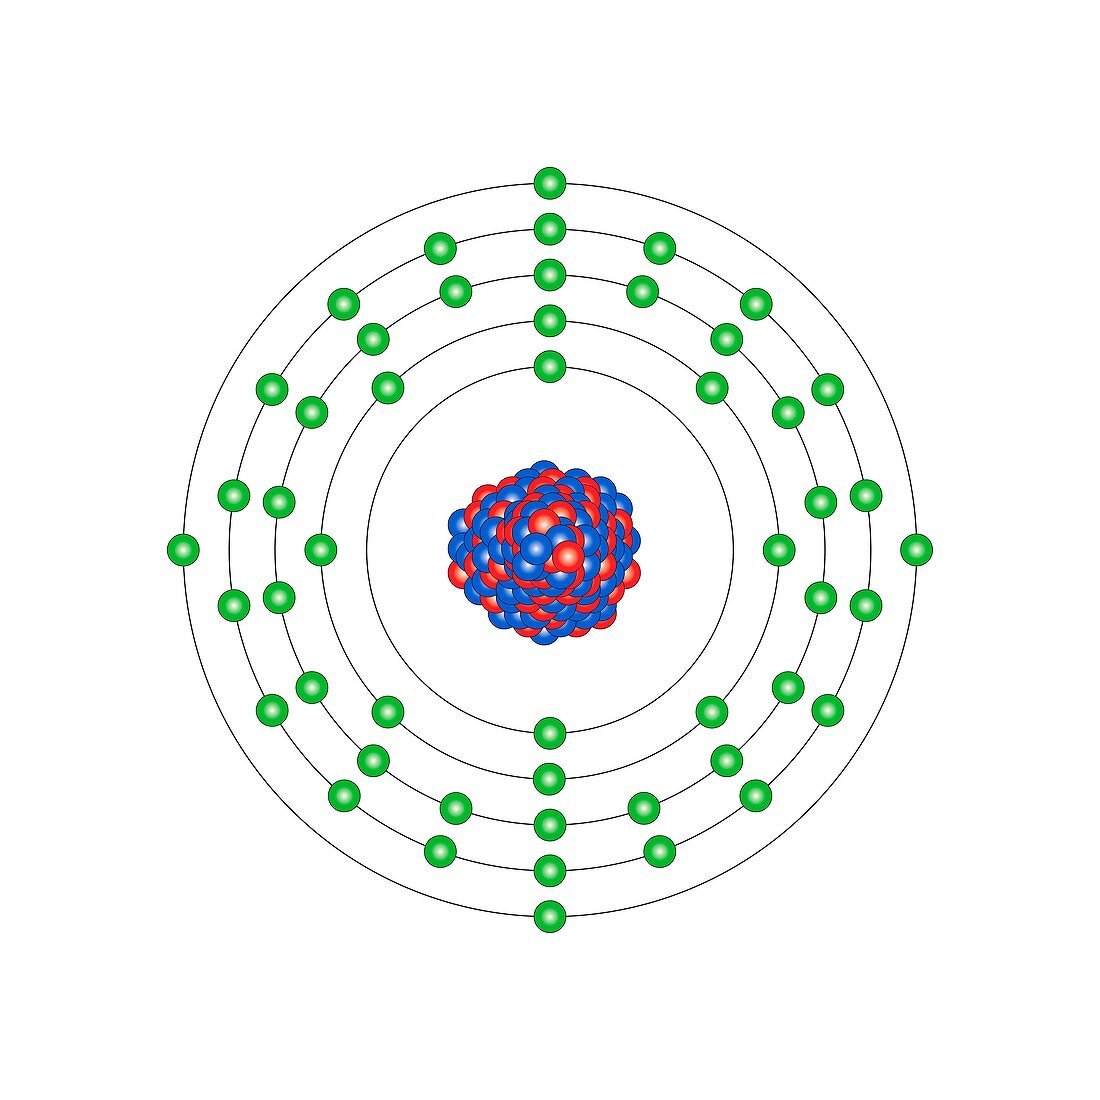 Tin,atomic structure